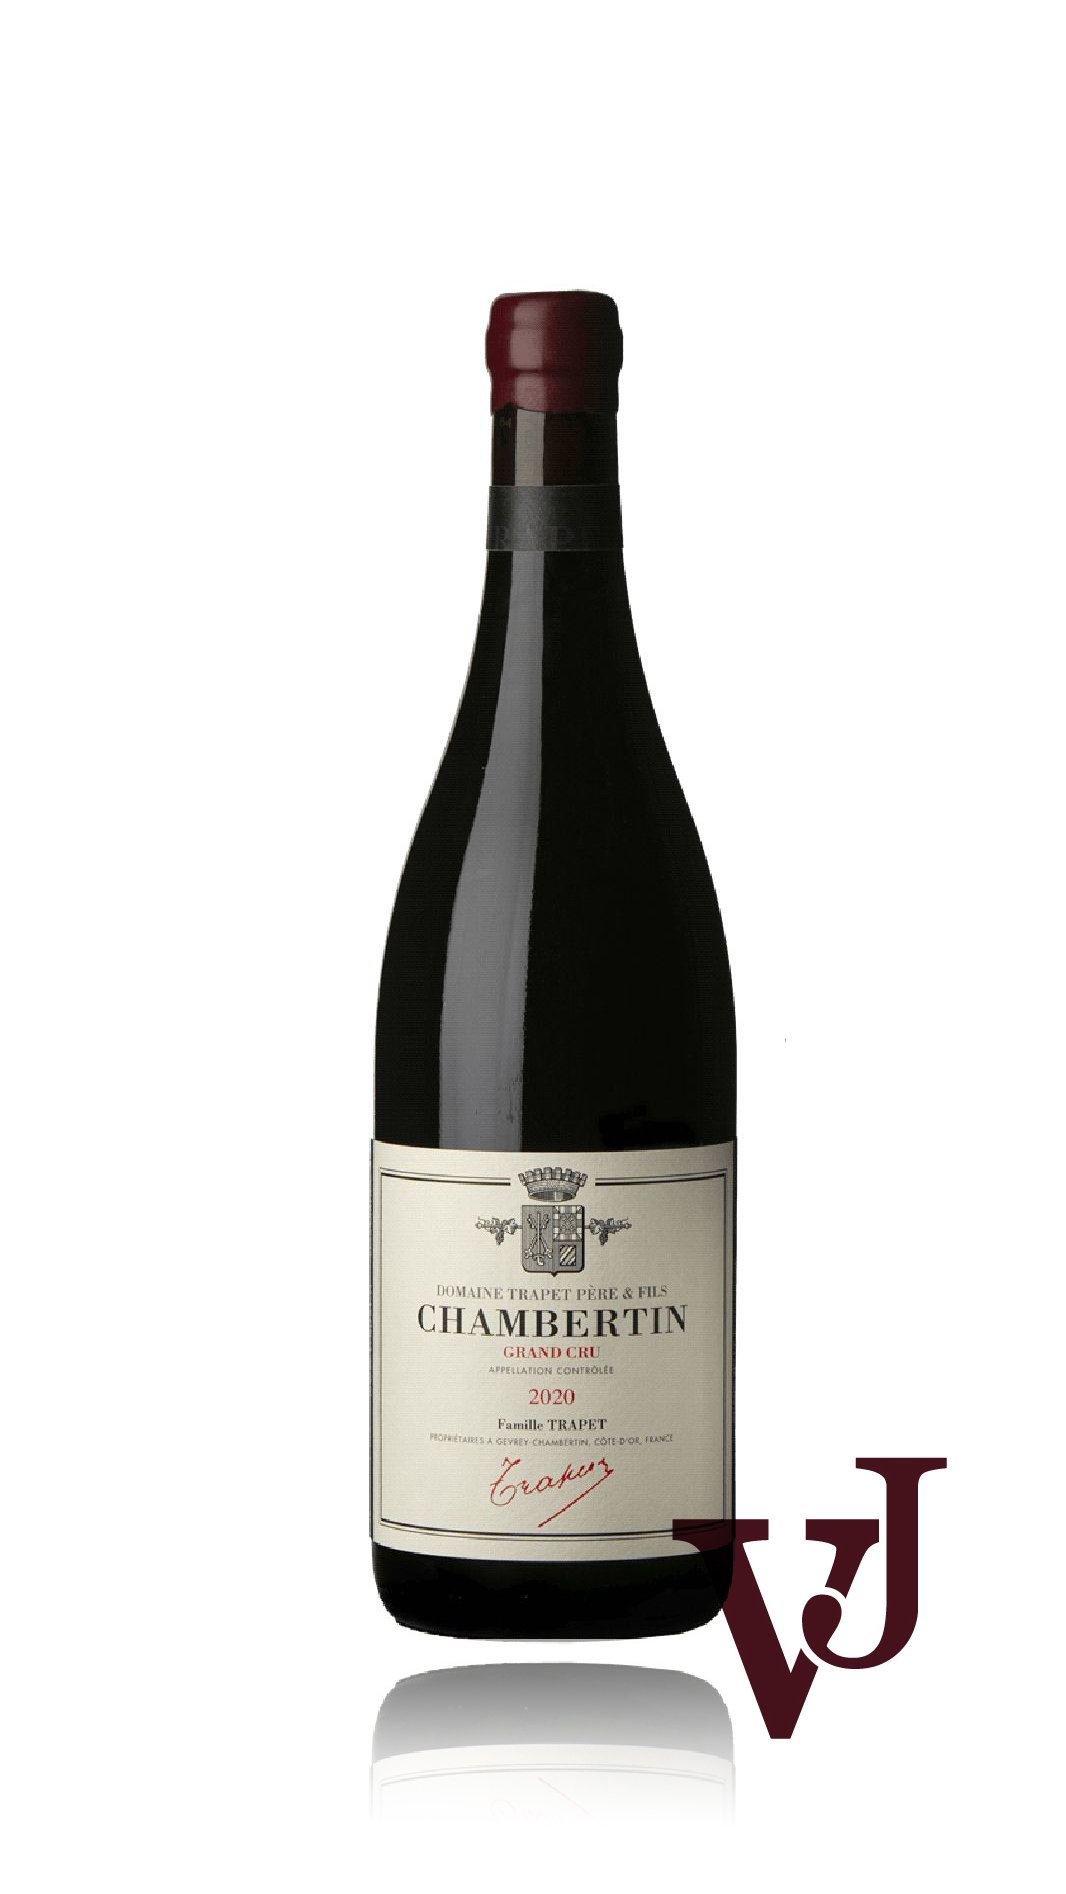 Rött Vin - Chambertin Grand Cru Domaine Trapet 2020 artikel nummer 9217801 från producenten Domaine Trapet från området Frankrike